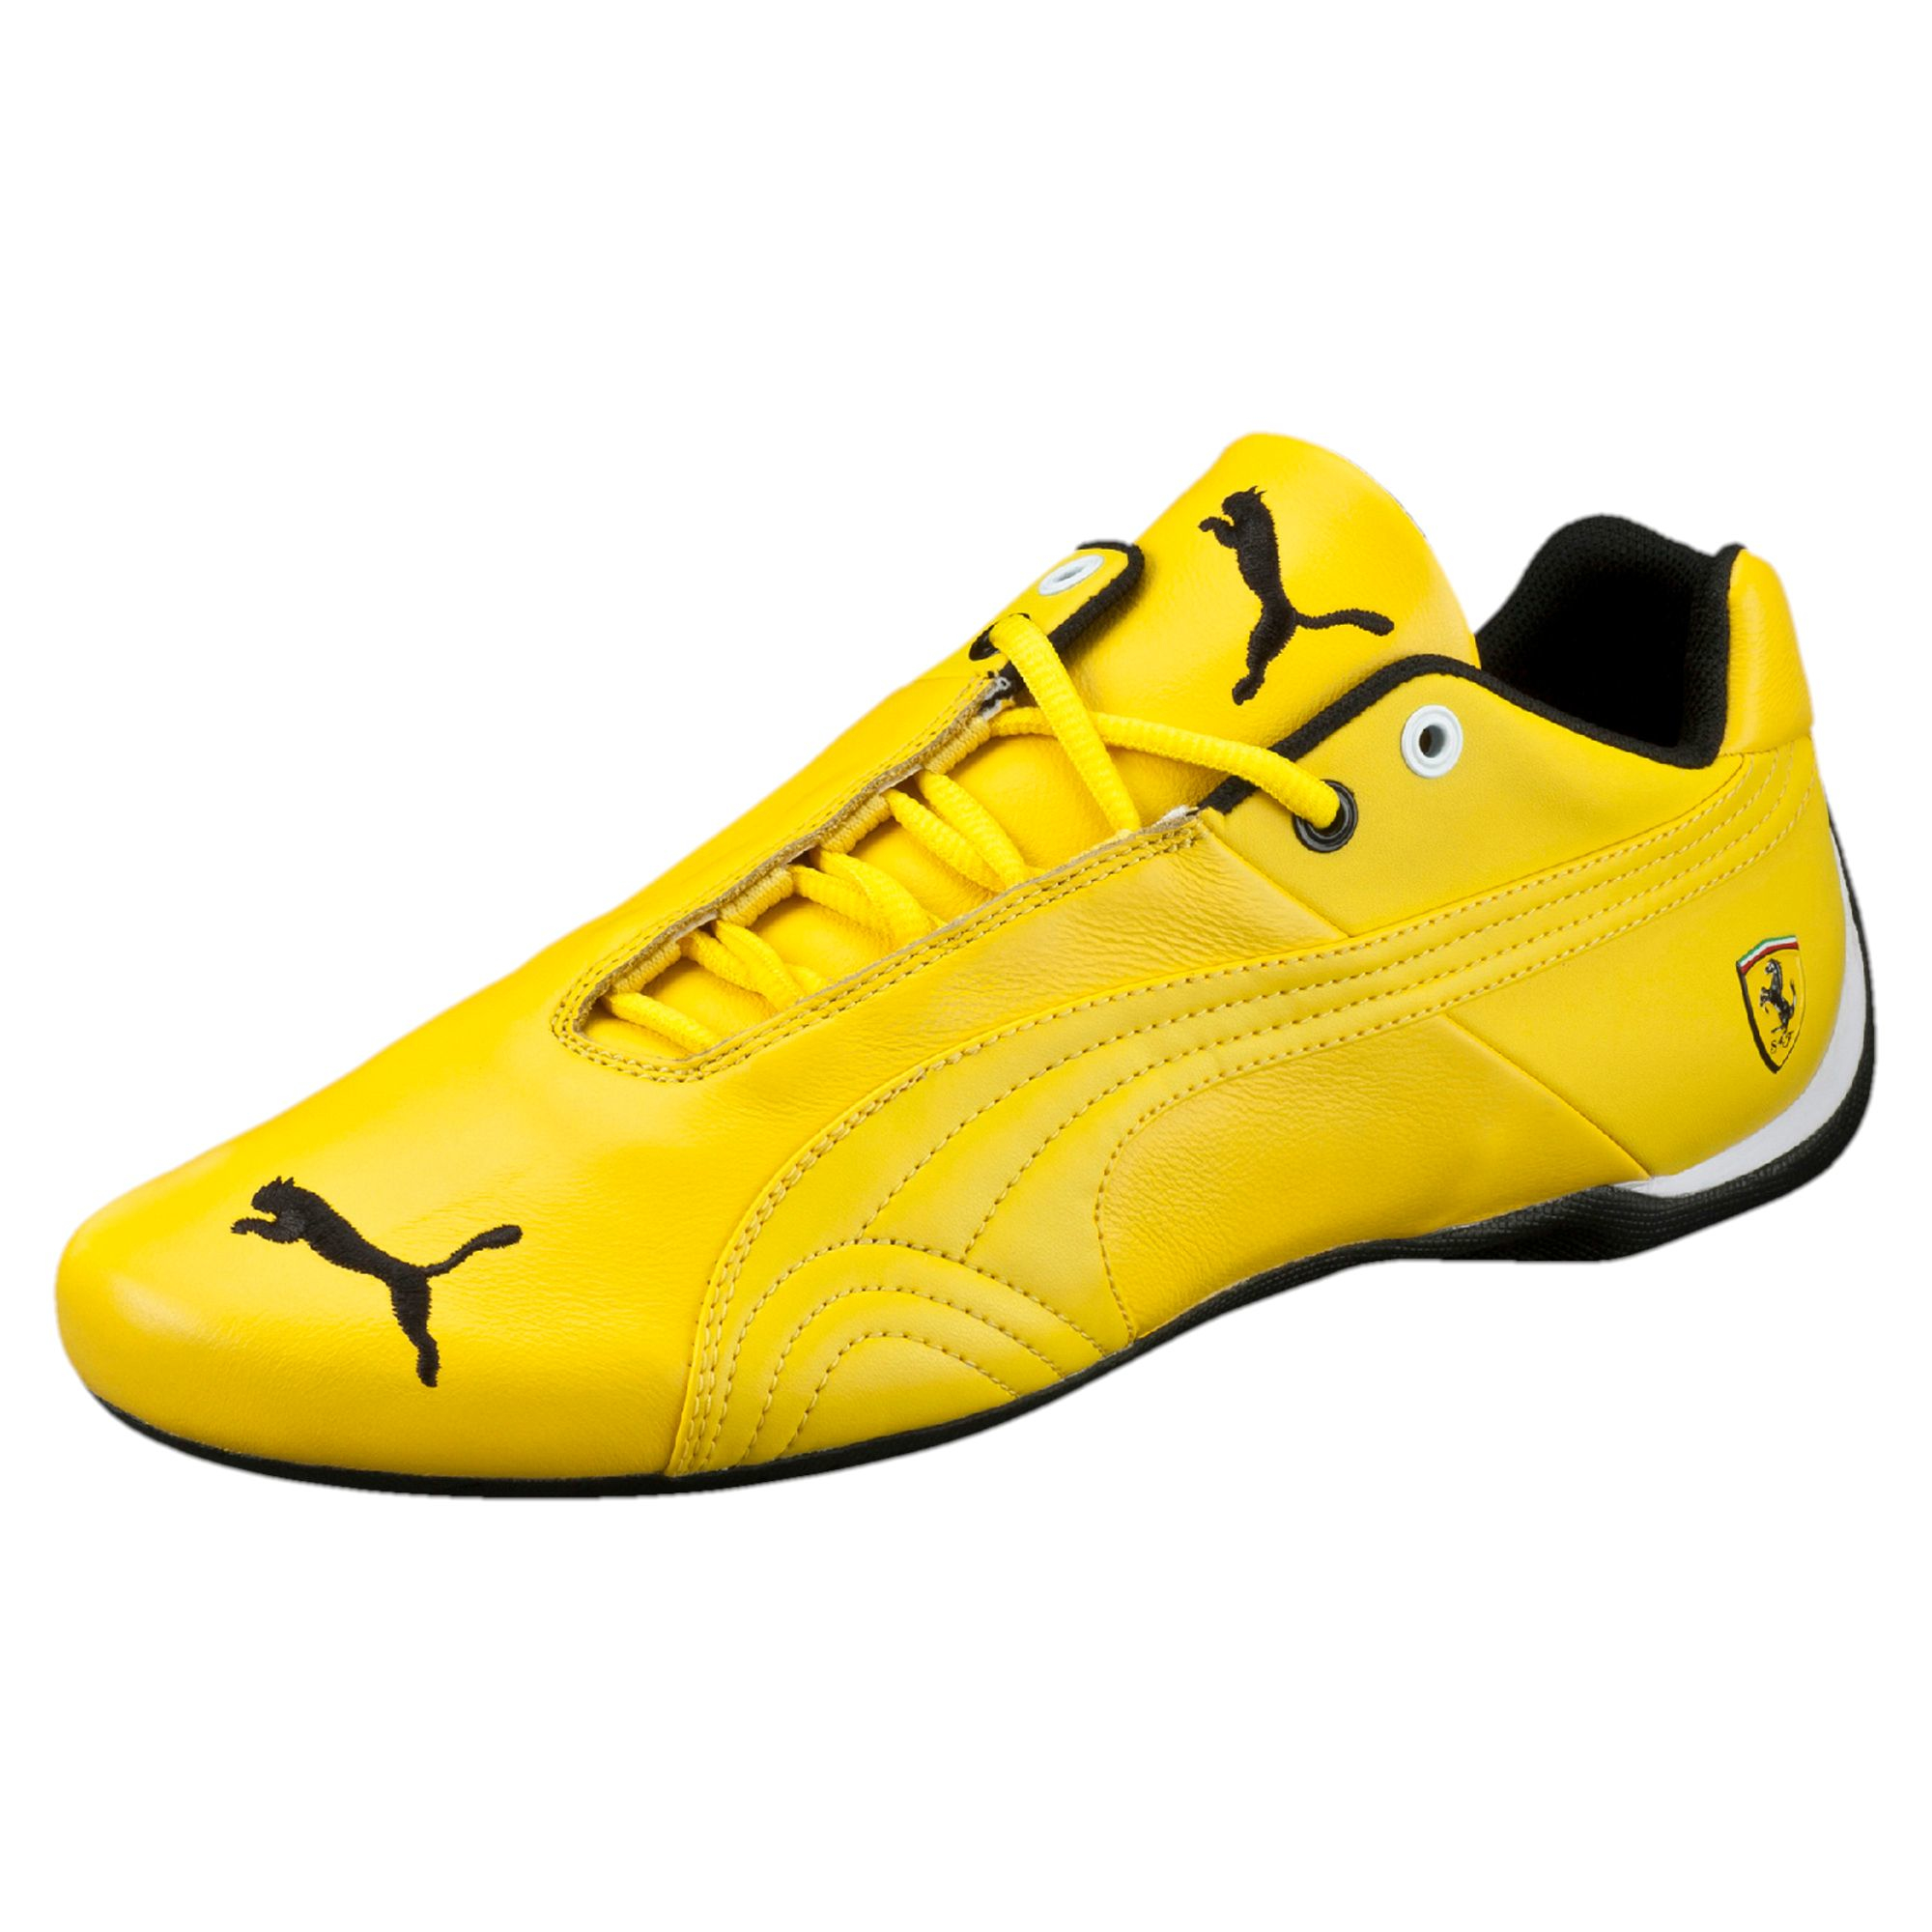 Lyst - Puma Ferrari Future Cat Leather Men's Shoes in Yellow for Men